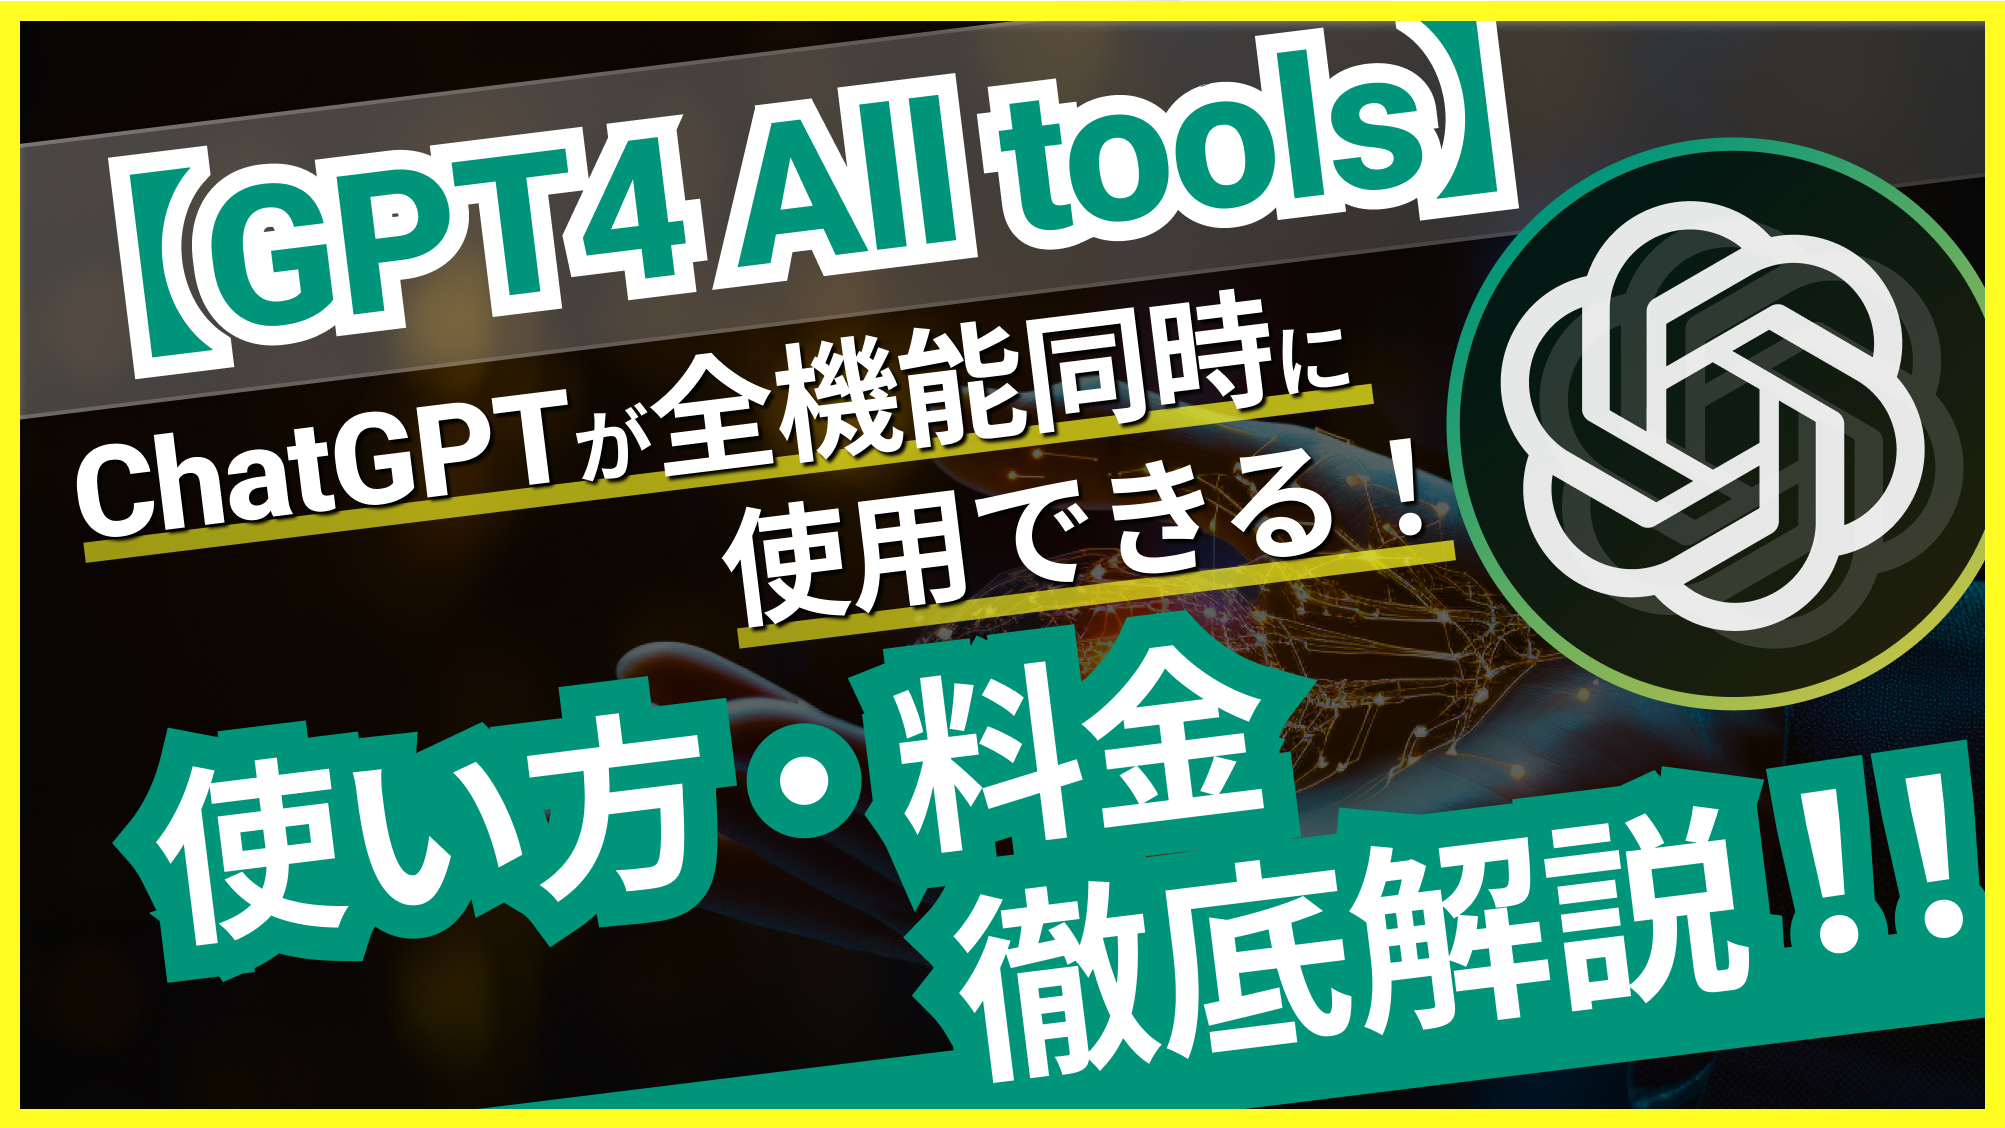 GPT-4-All-Tools ChatGPT 全機能同時 使用 使い方 料金 徹底解説